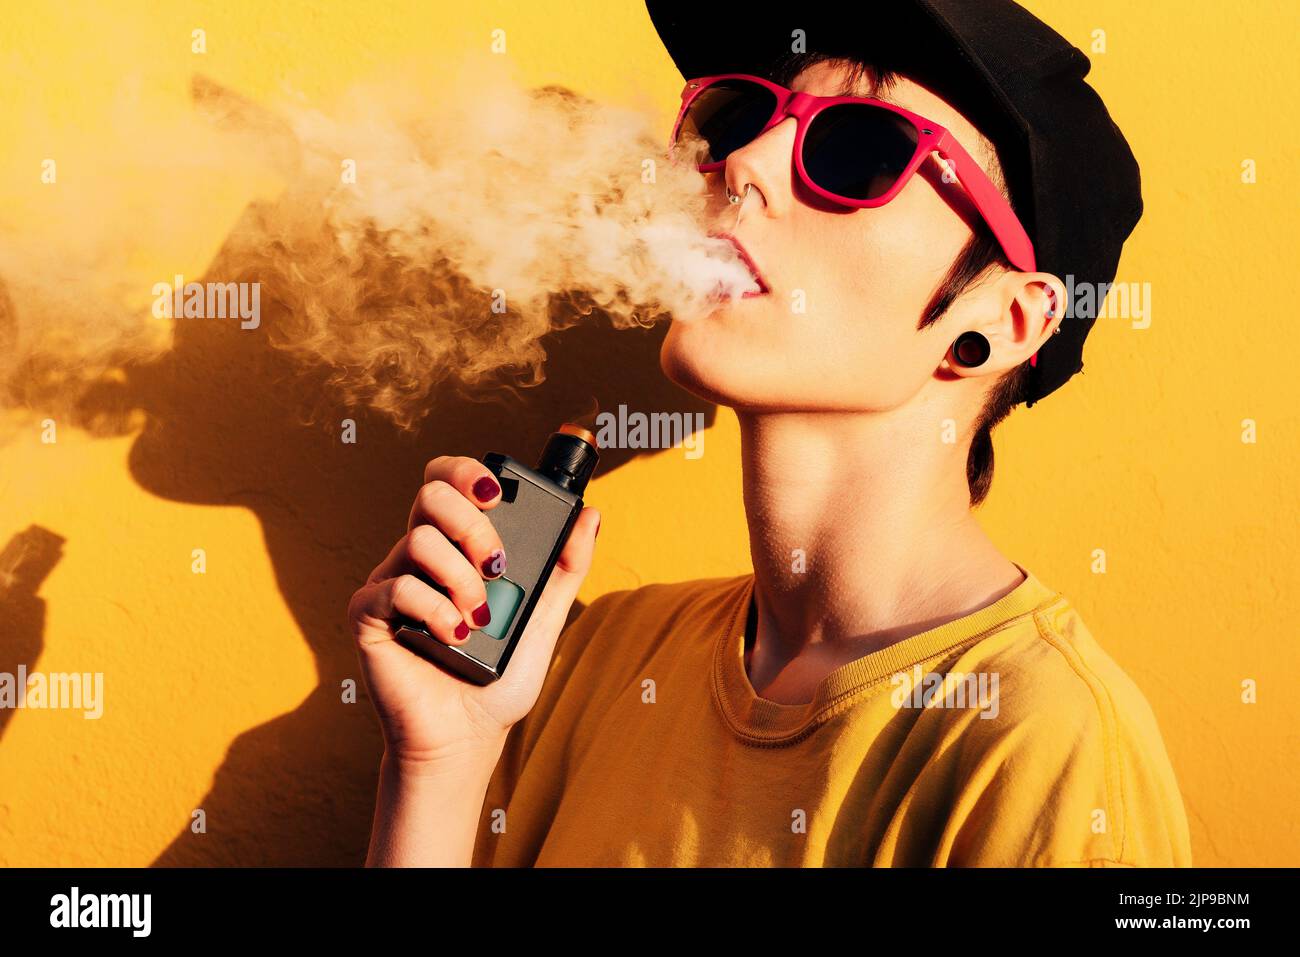 cool, smoke, elektrische zigarette, vaporizer, cools, smokes Stock Photo